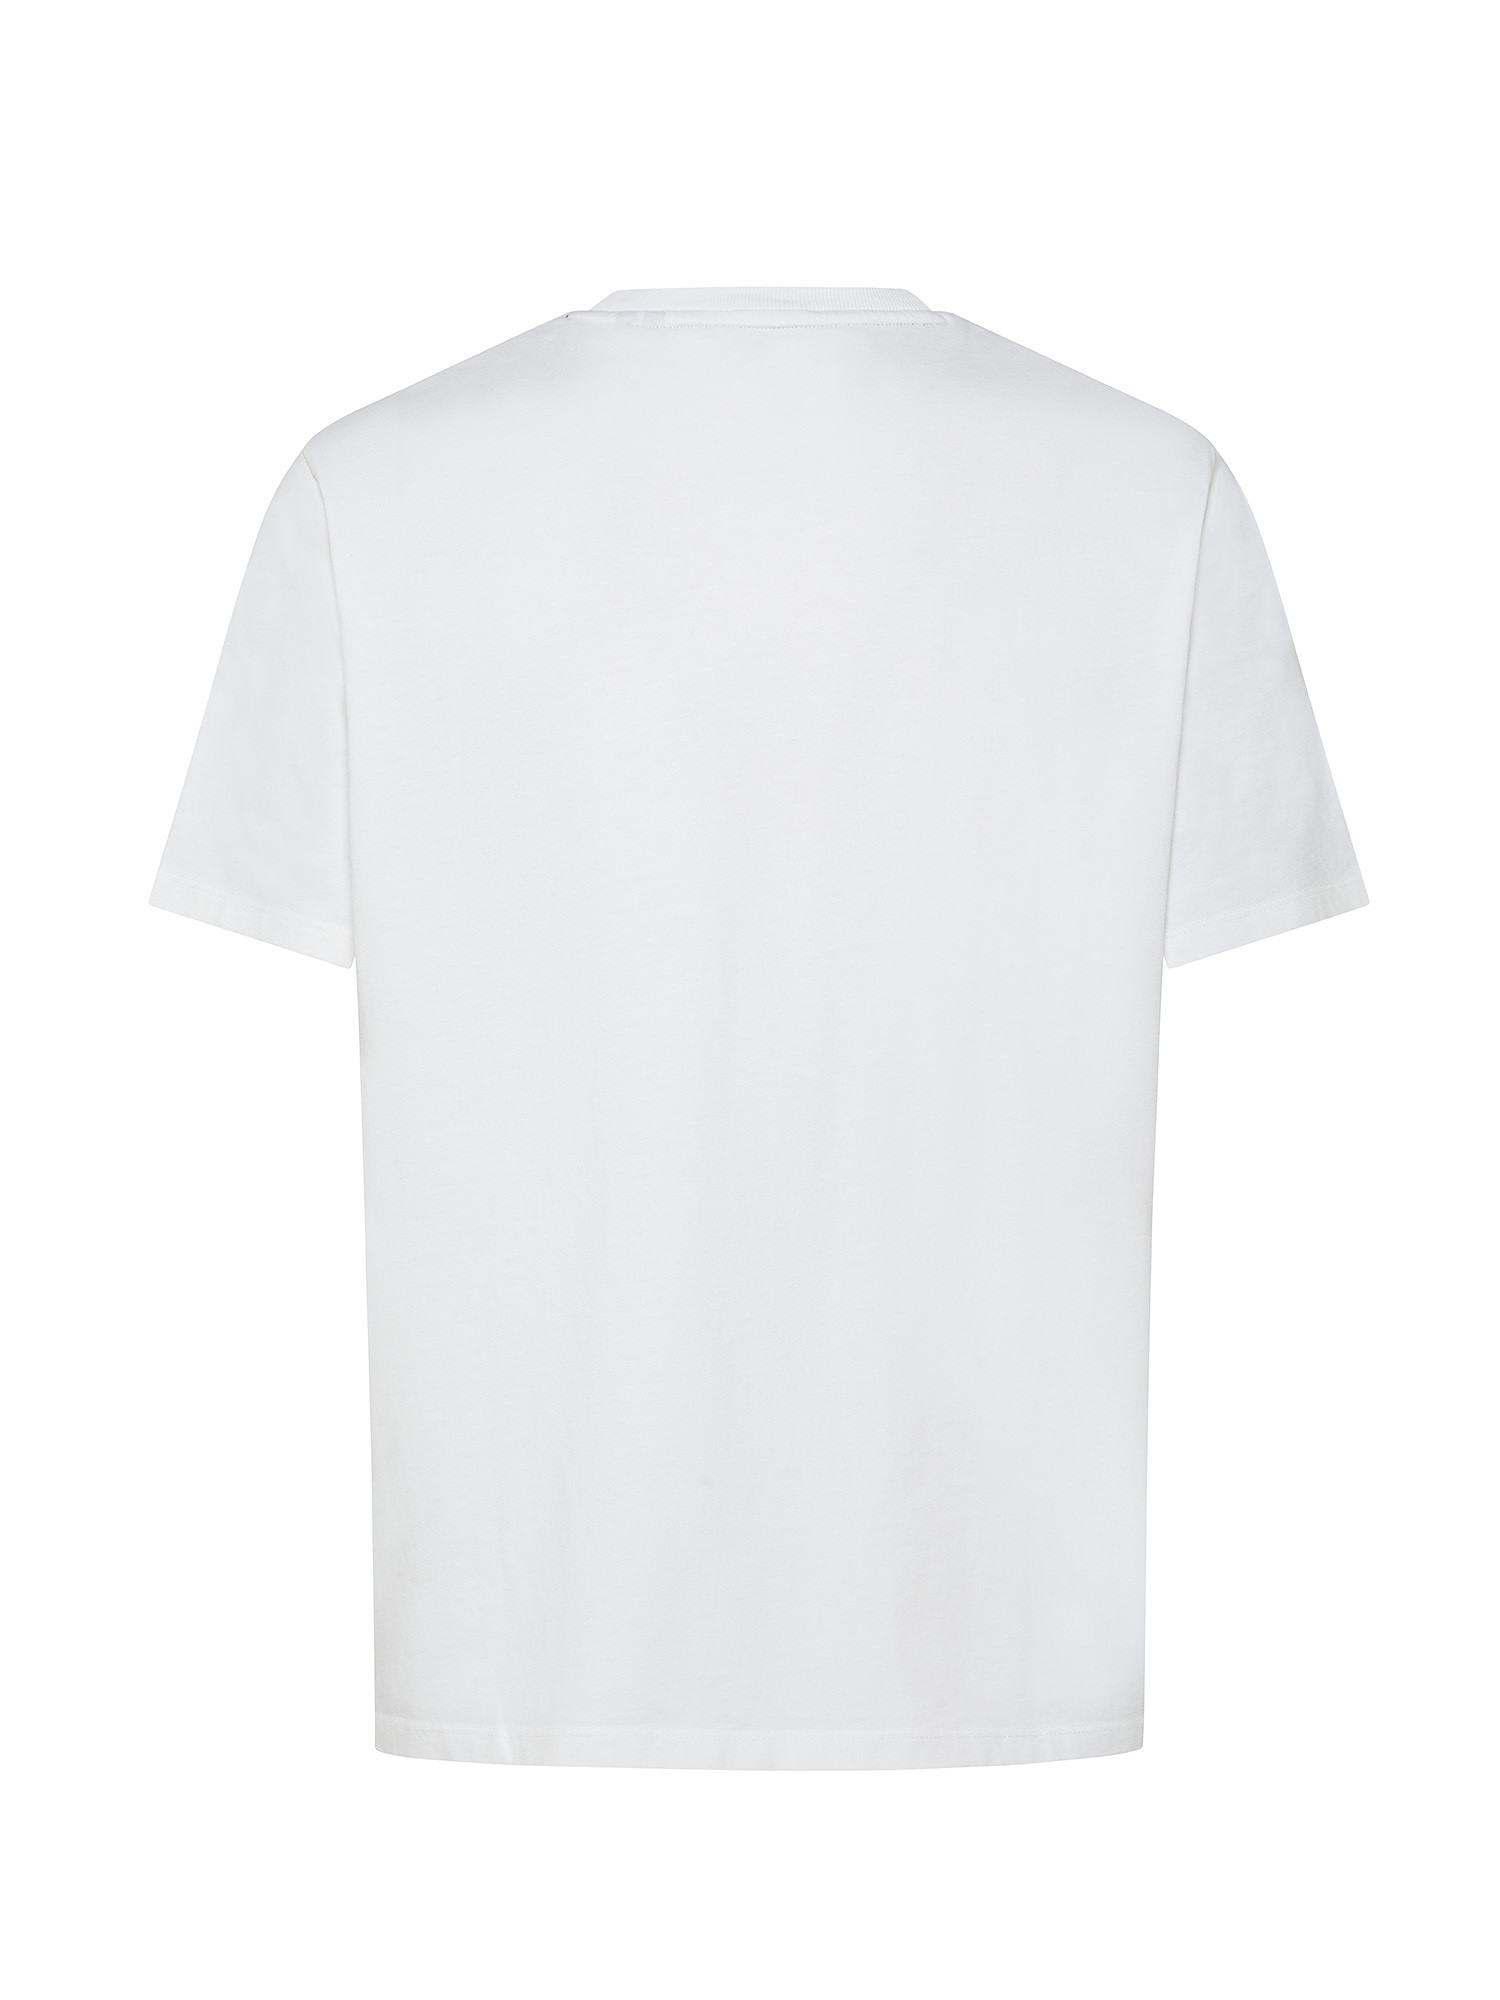 Superdry basic micro logo cotton t-shirt, White, large image number 1